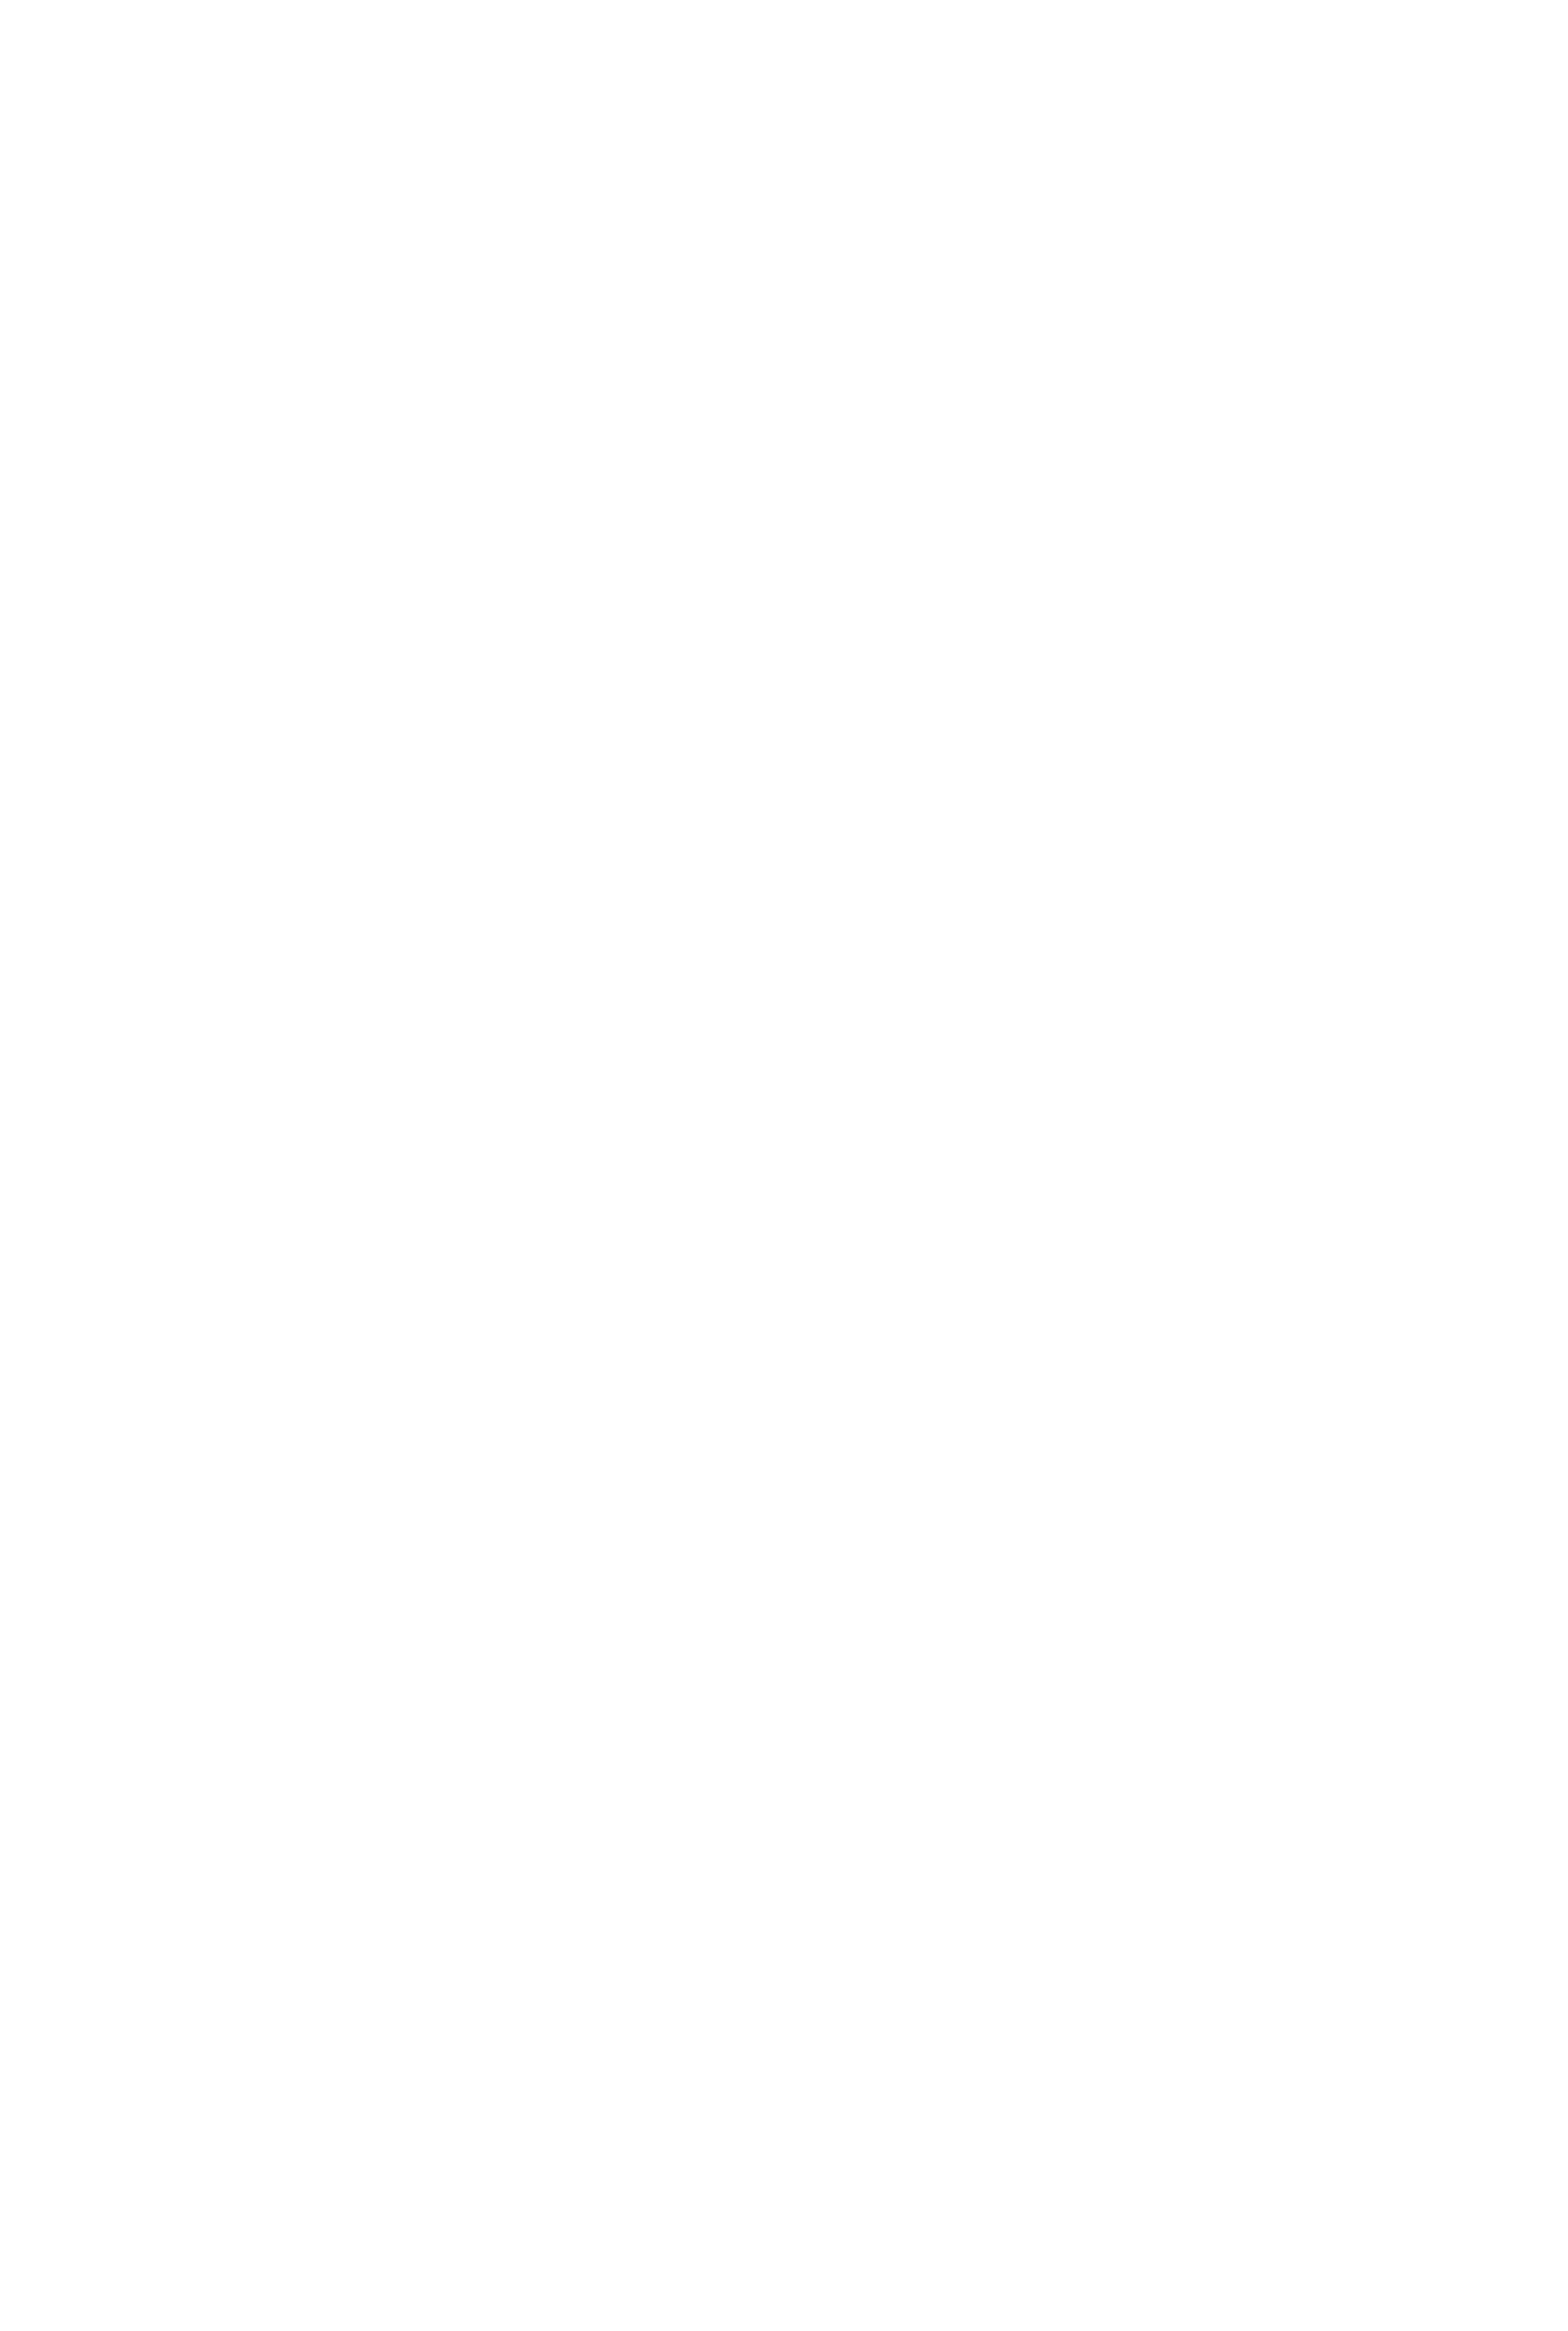 Вязаное пончо из кидмохера на шёлке по картине Моне "Берега Сены" бренда "Таня Исаева"